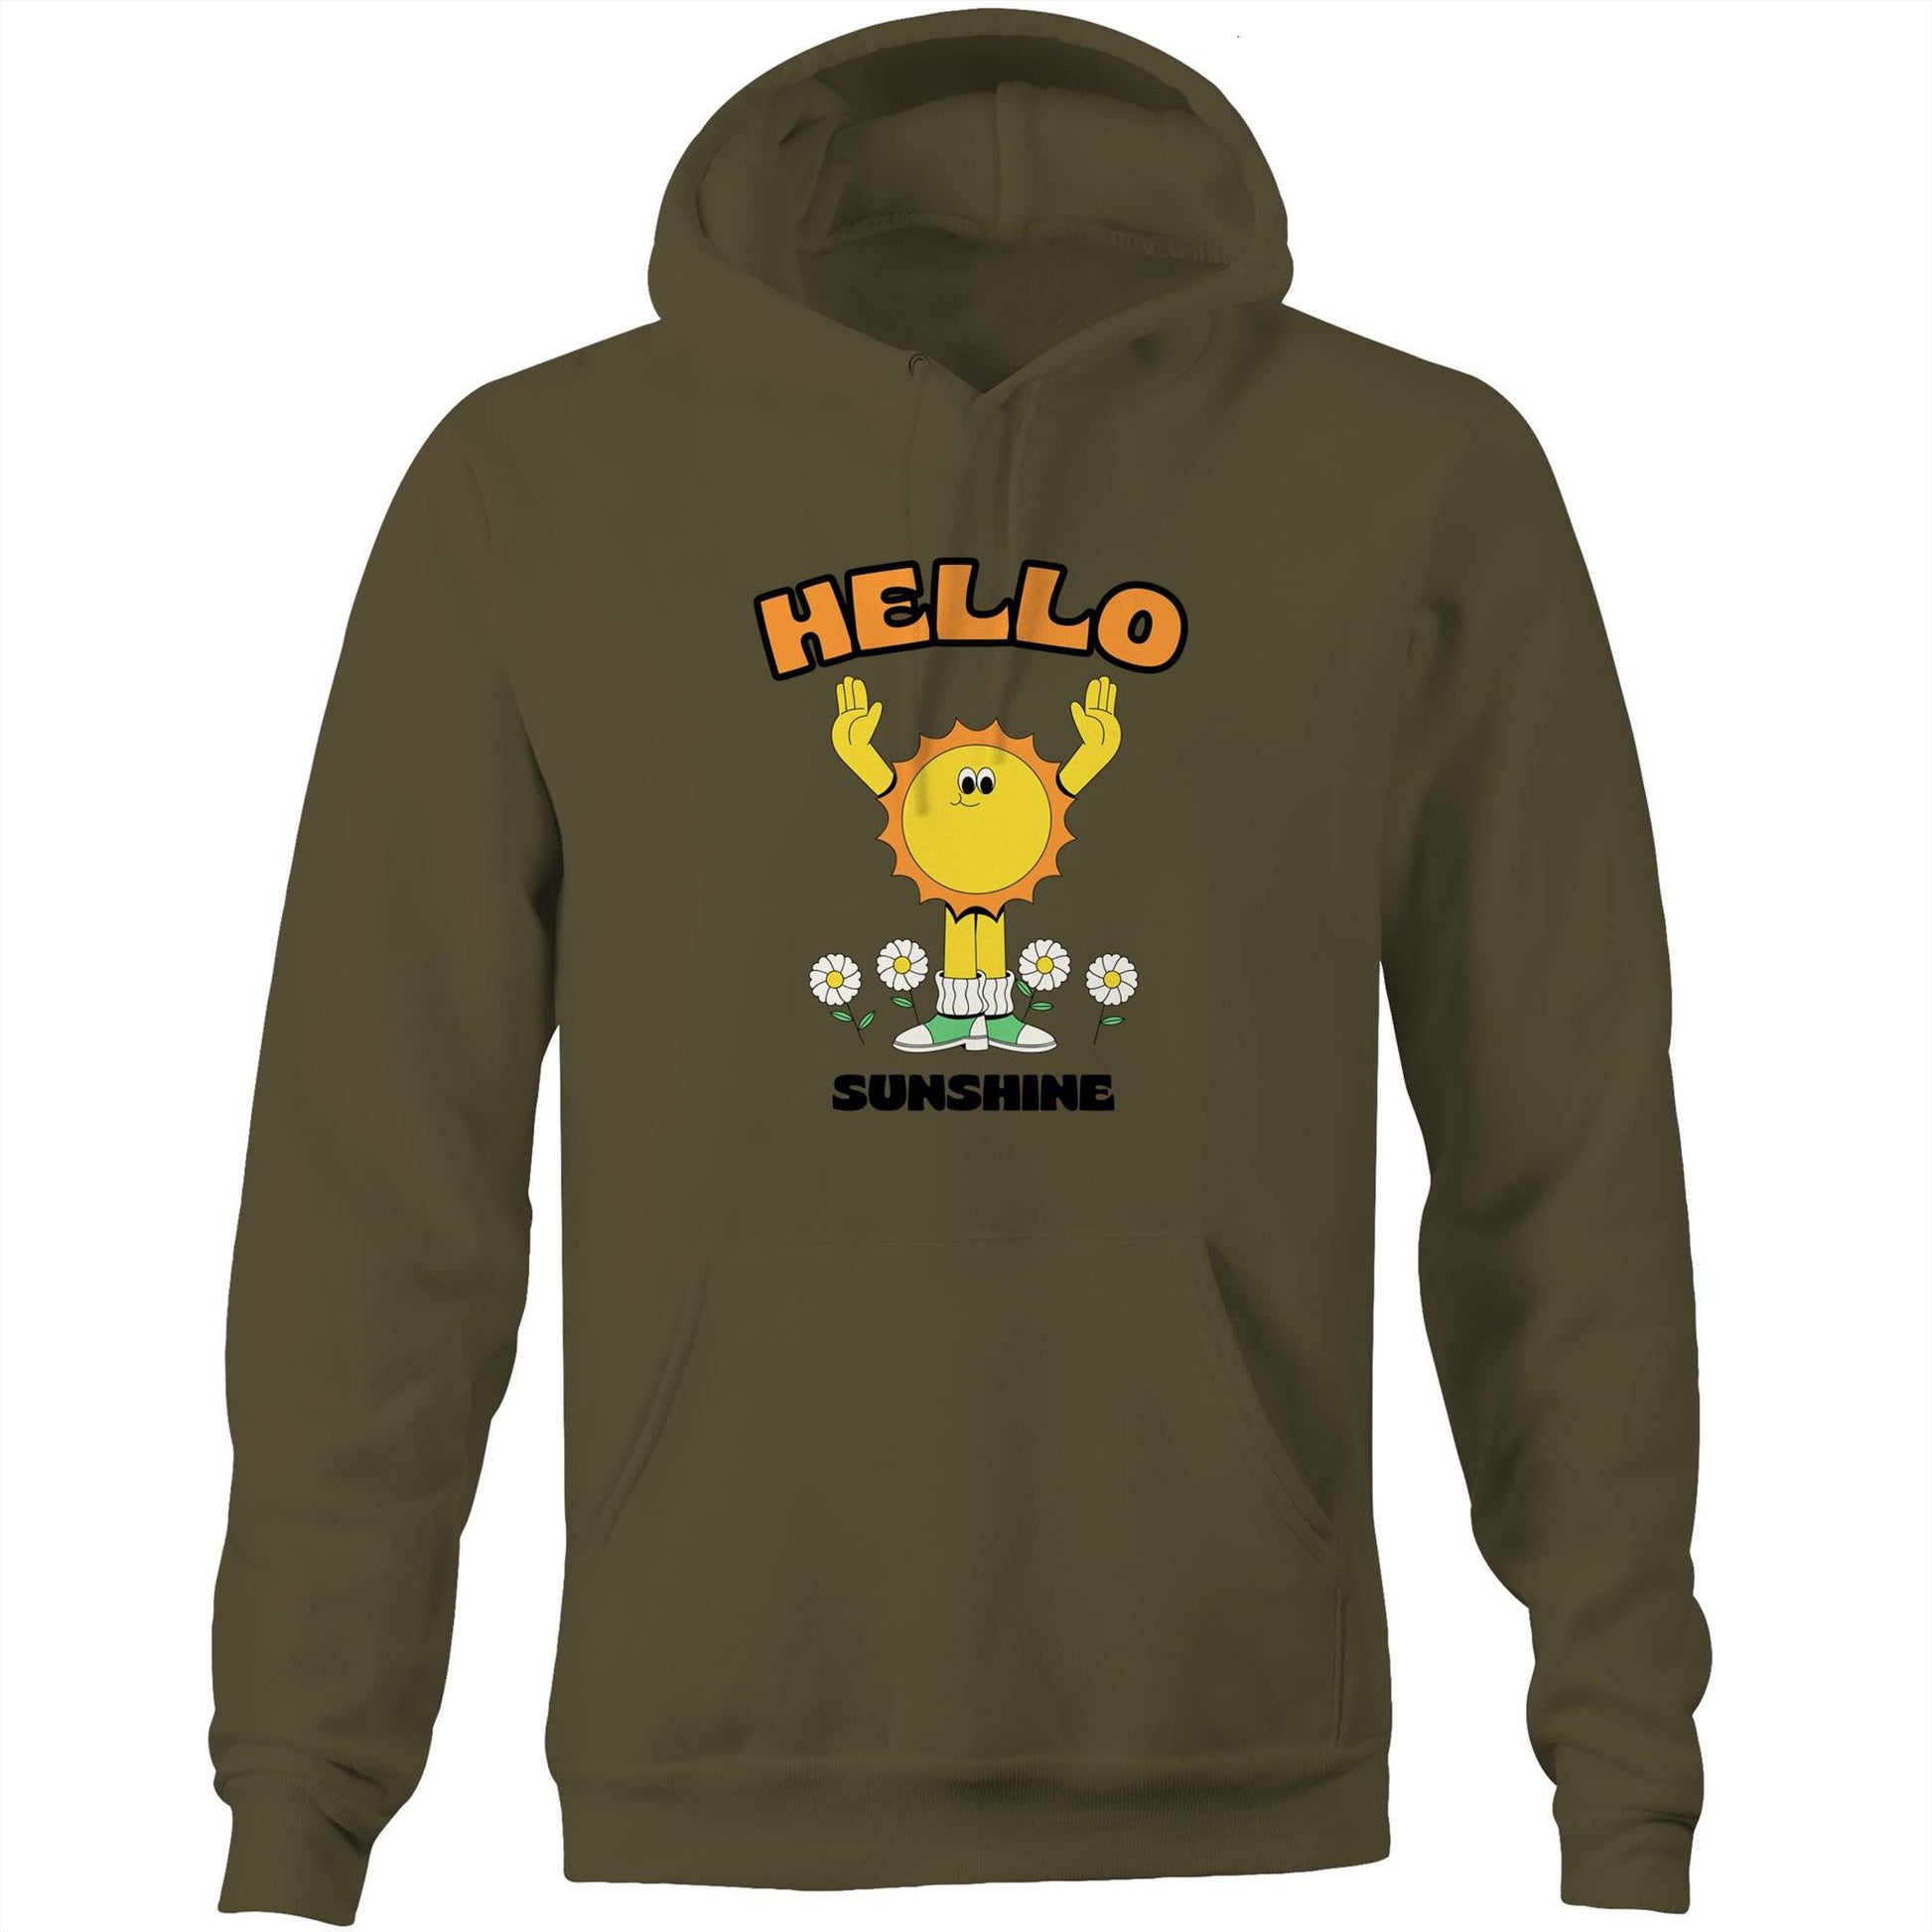 Hello Sunshine - Pocket Hoodie Sweatshirt Army Hoodie Retro Summer